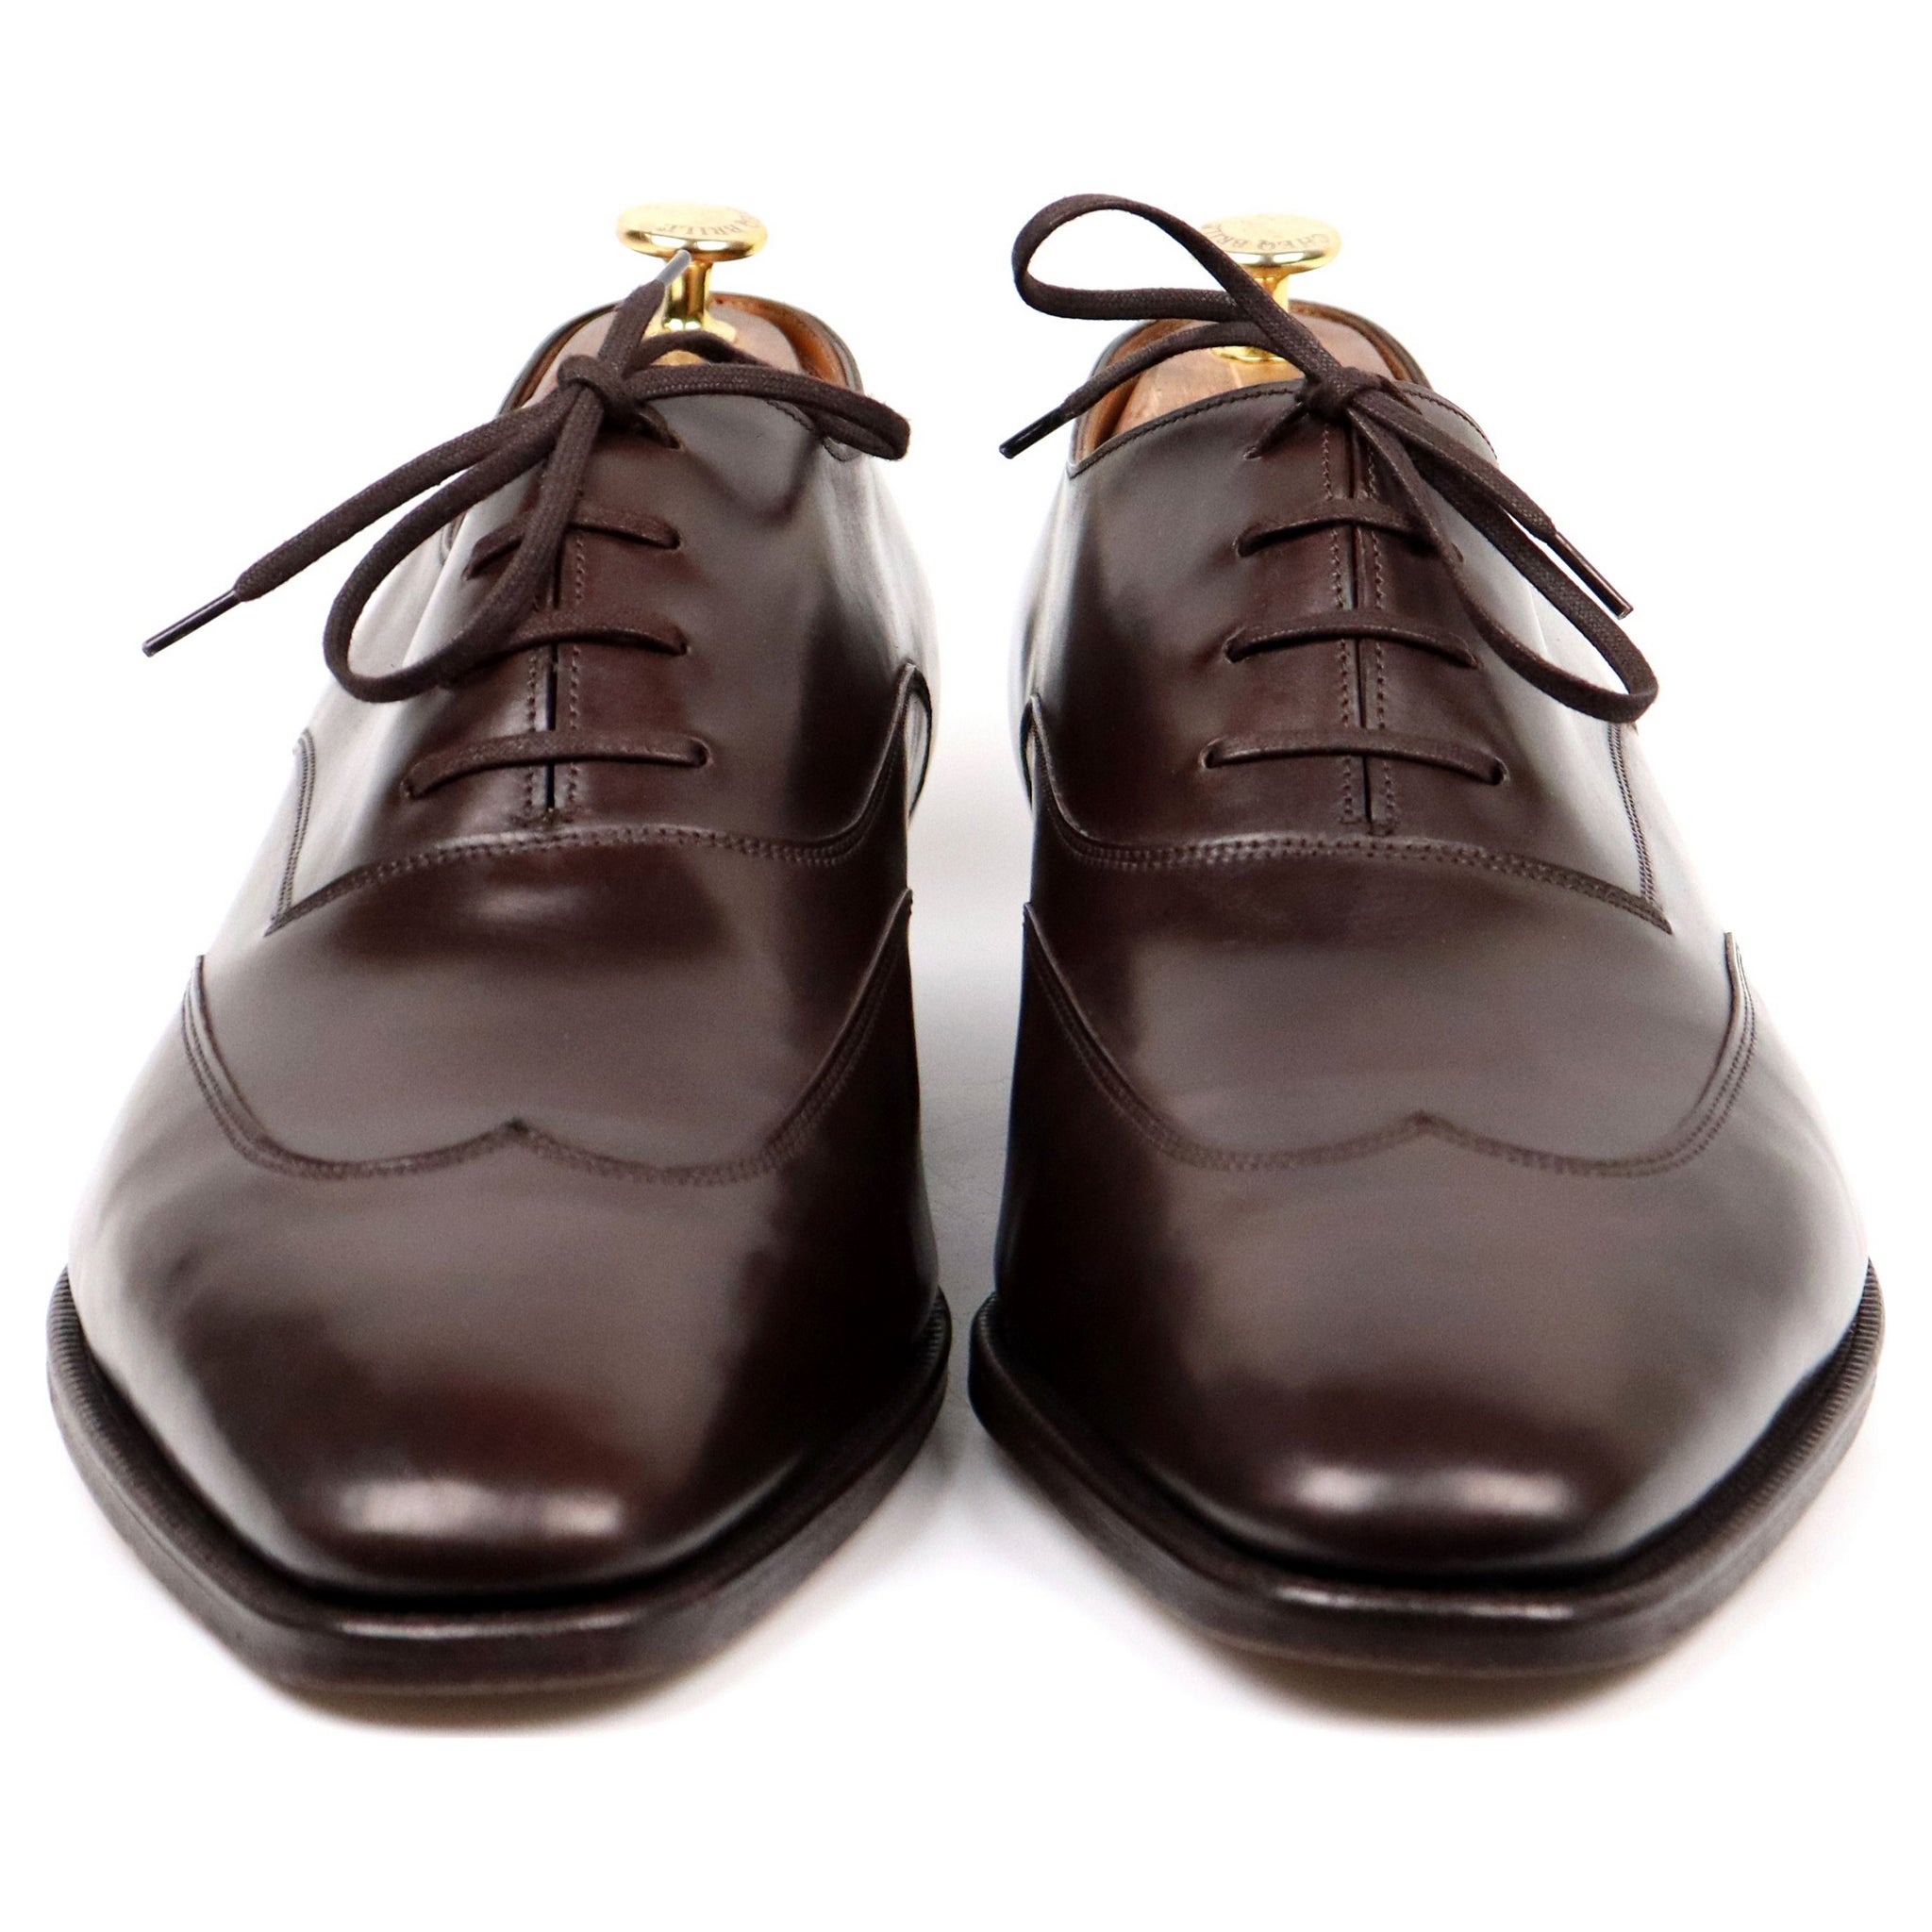 Prestige 'Woodcote' Brown Leather Brogue Oxford 11.5 - Abbot's